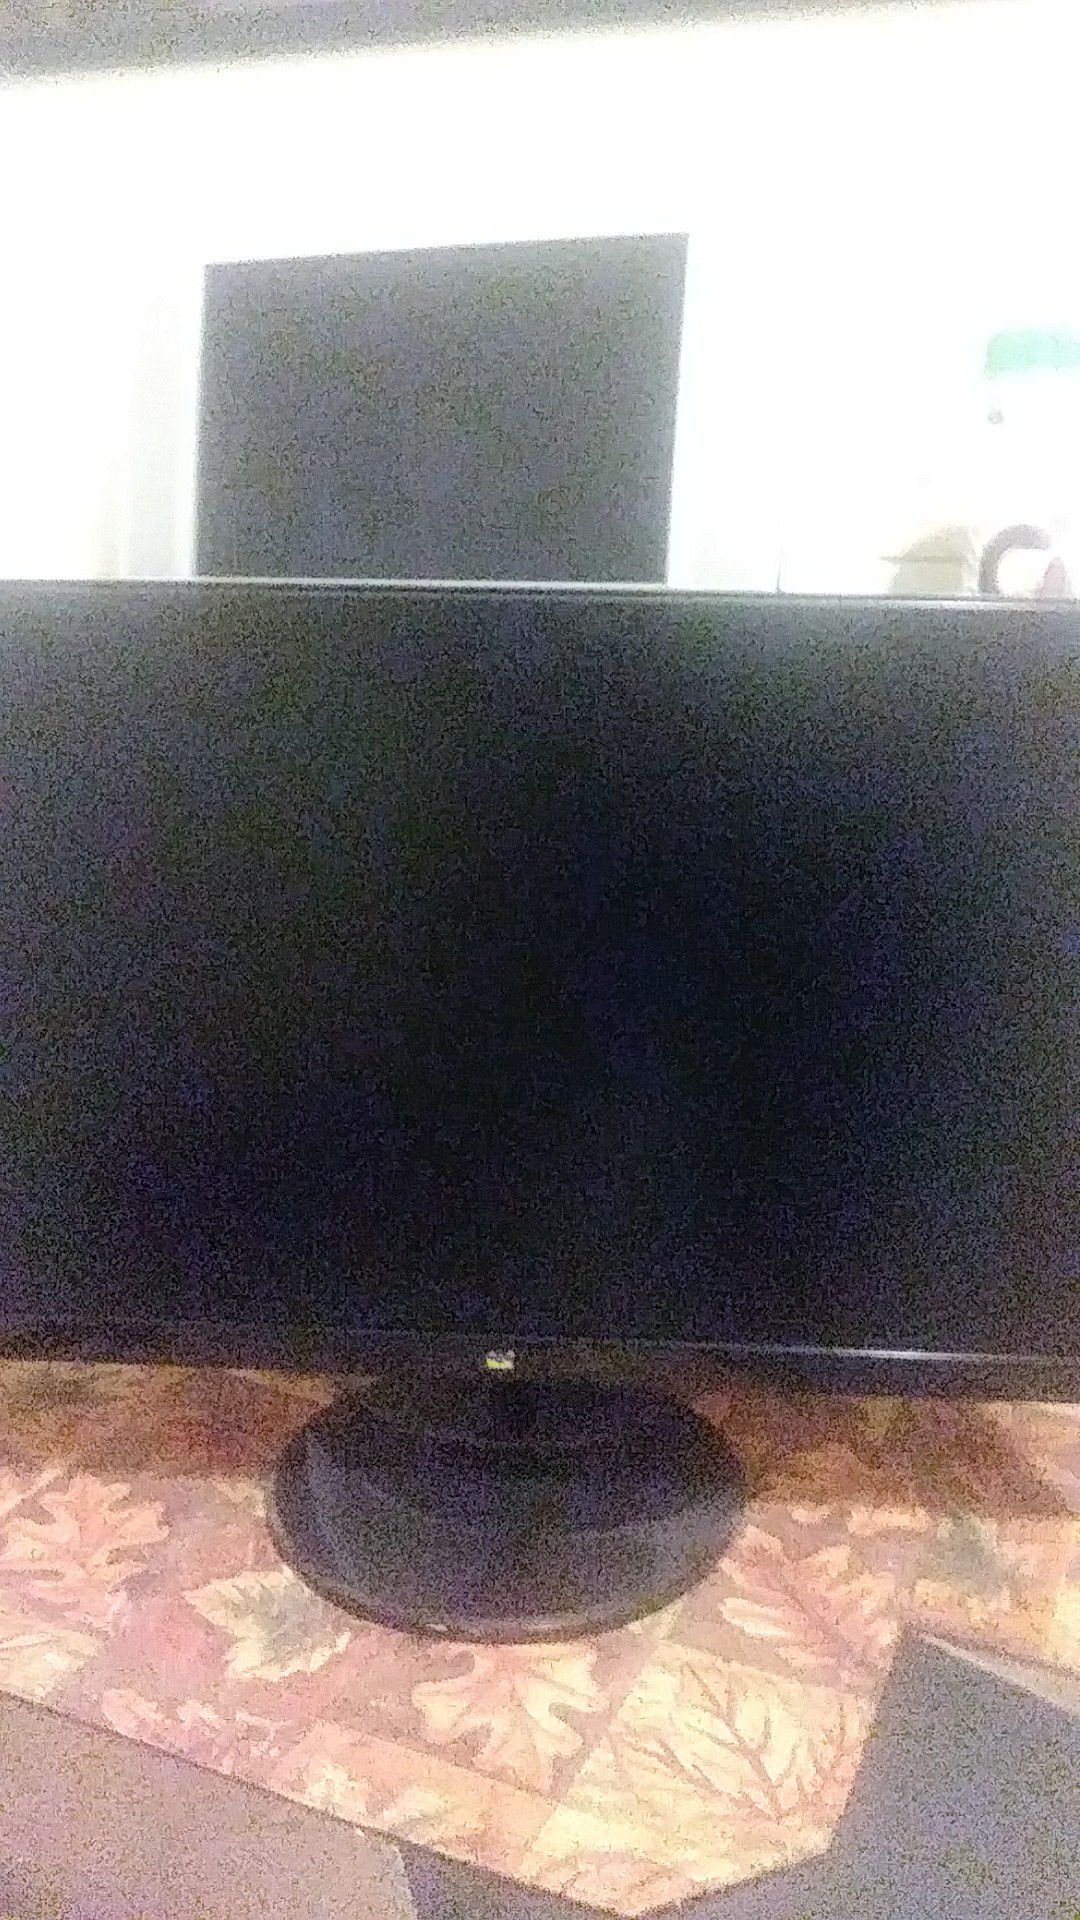 Ultra thin ViewSonic monitor, Computer, Gaming or Tv.